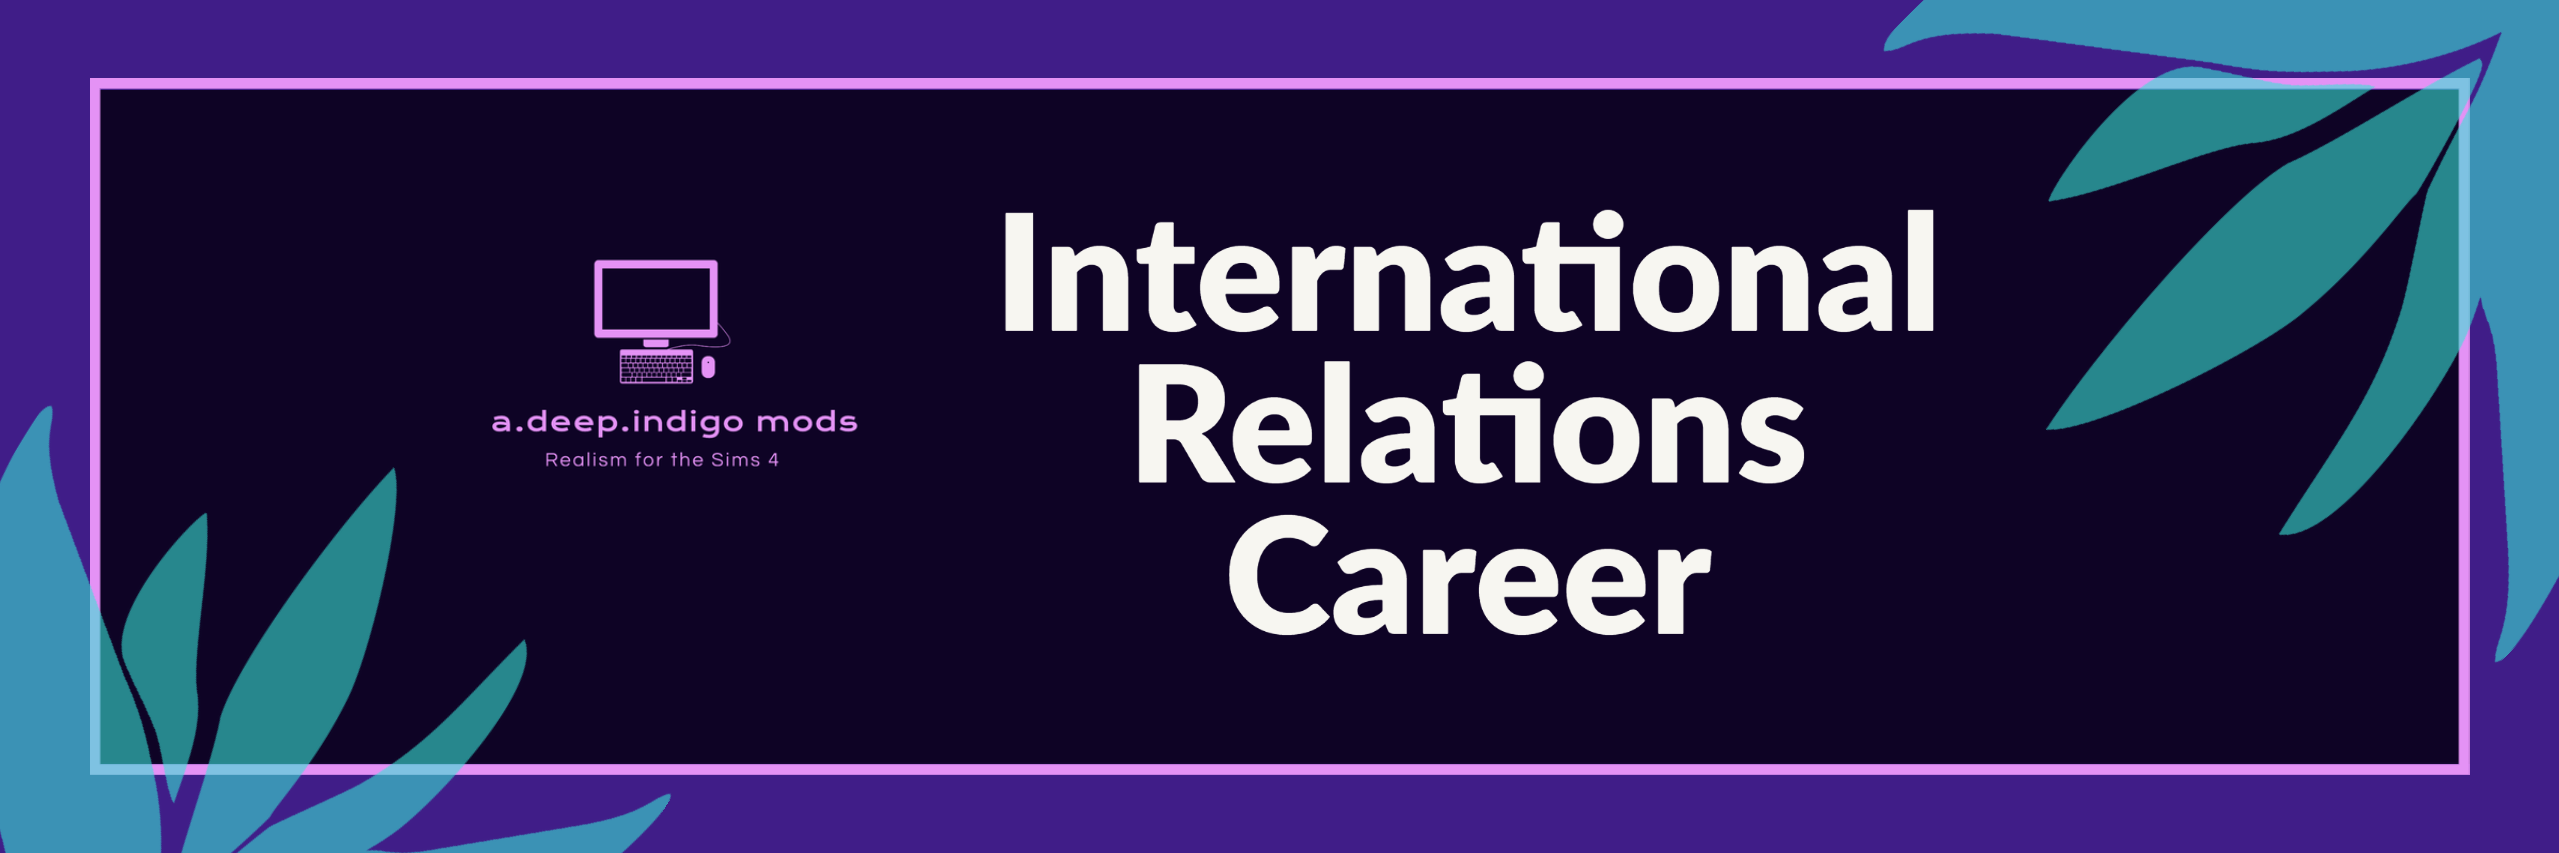 International Relations Career